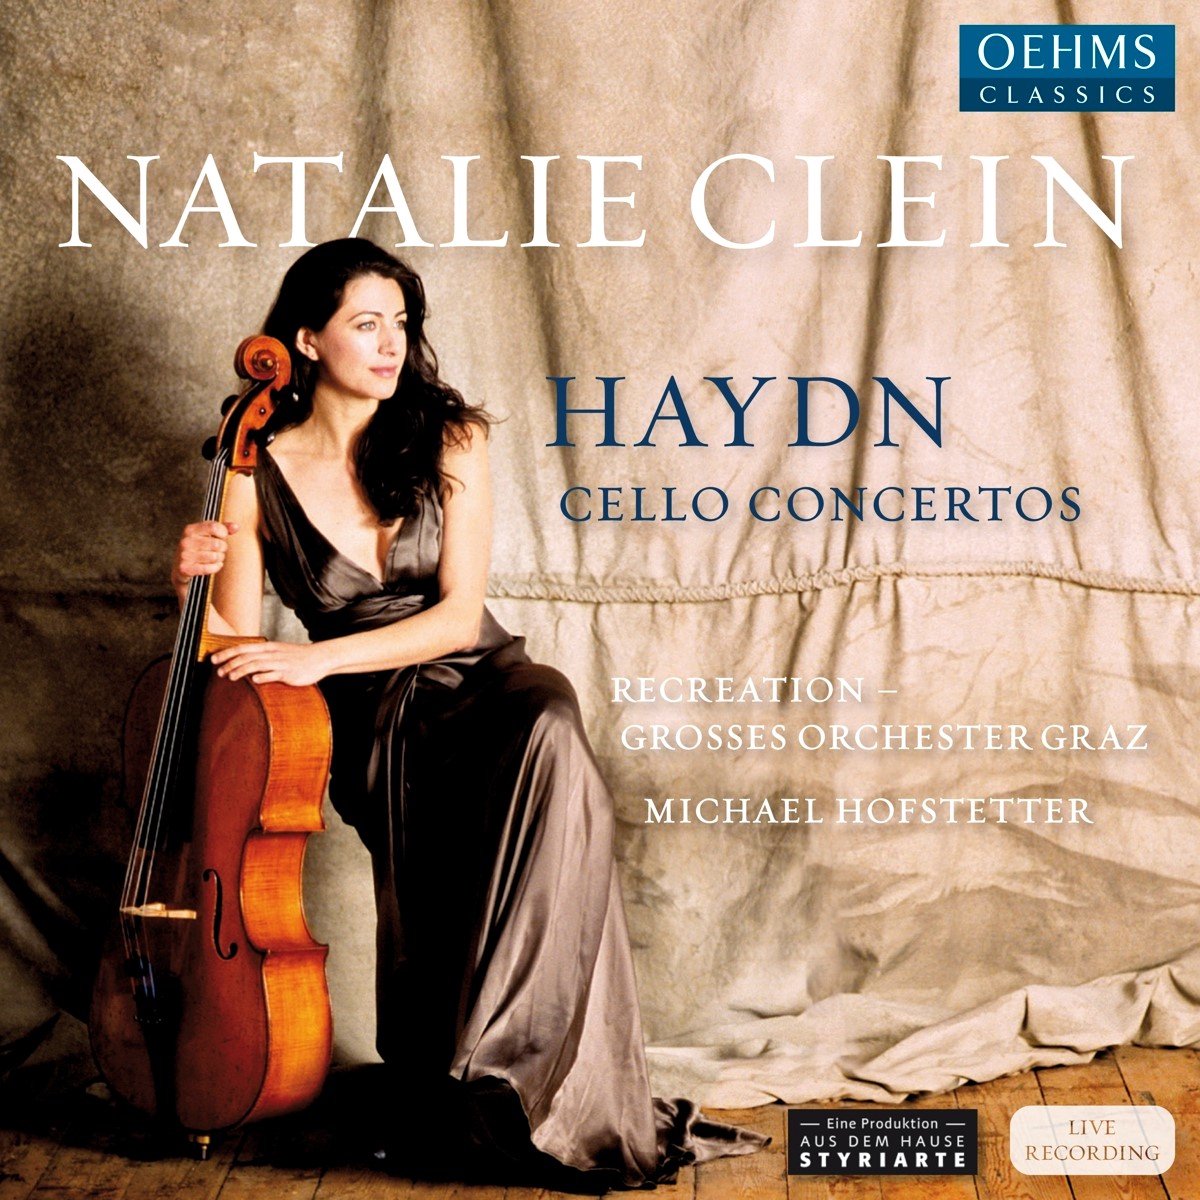 Natalie Clein, Grosses Orchester Graz, Michael Hofstetter - Cello Concertos (CD) - Natalie Clein, Grosses Orchester Graz, Michael Hofstetter